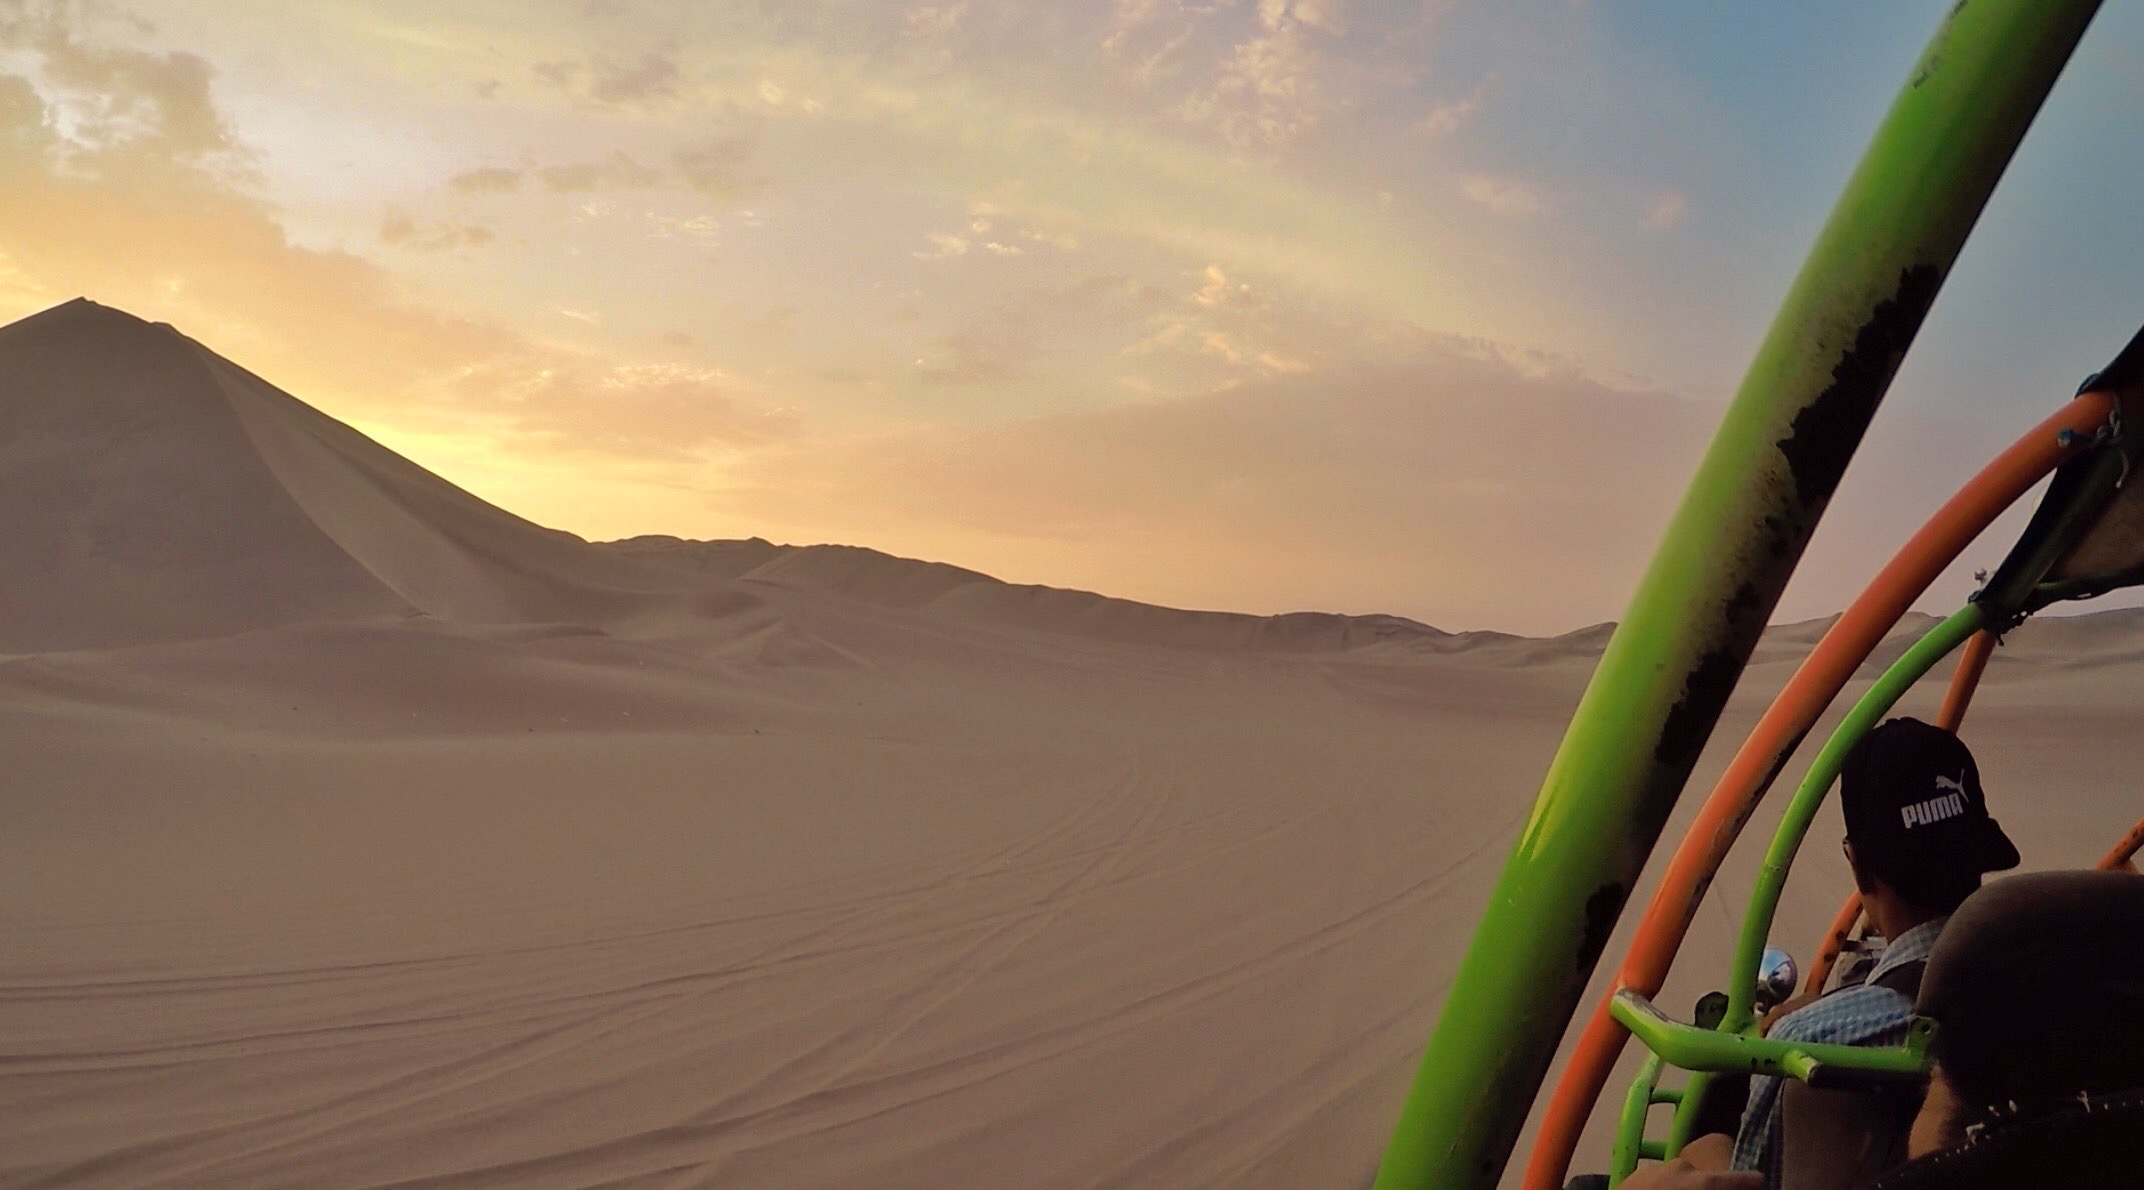 Dune buggy ride over sand dunes in Huacachina, Peru. Sand boarding in Huacachina & full guide